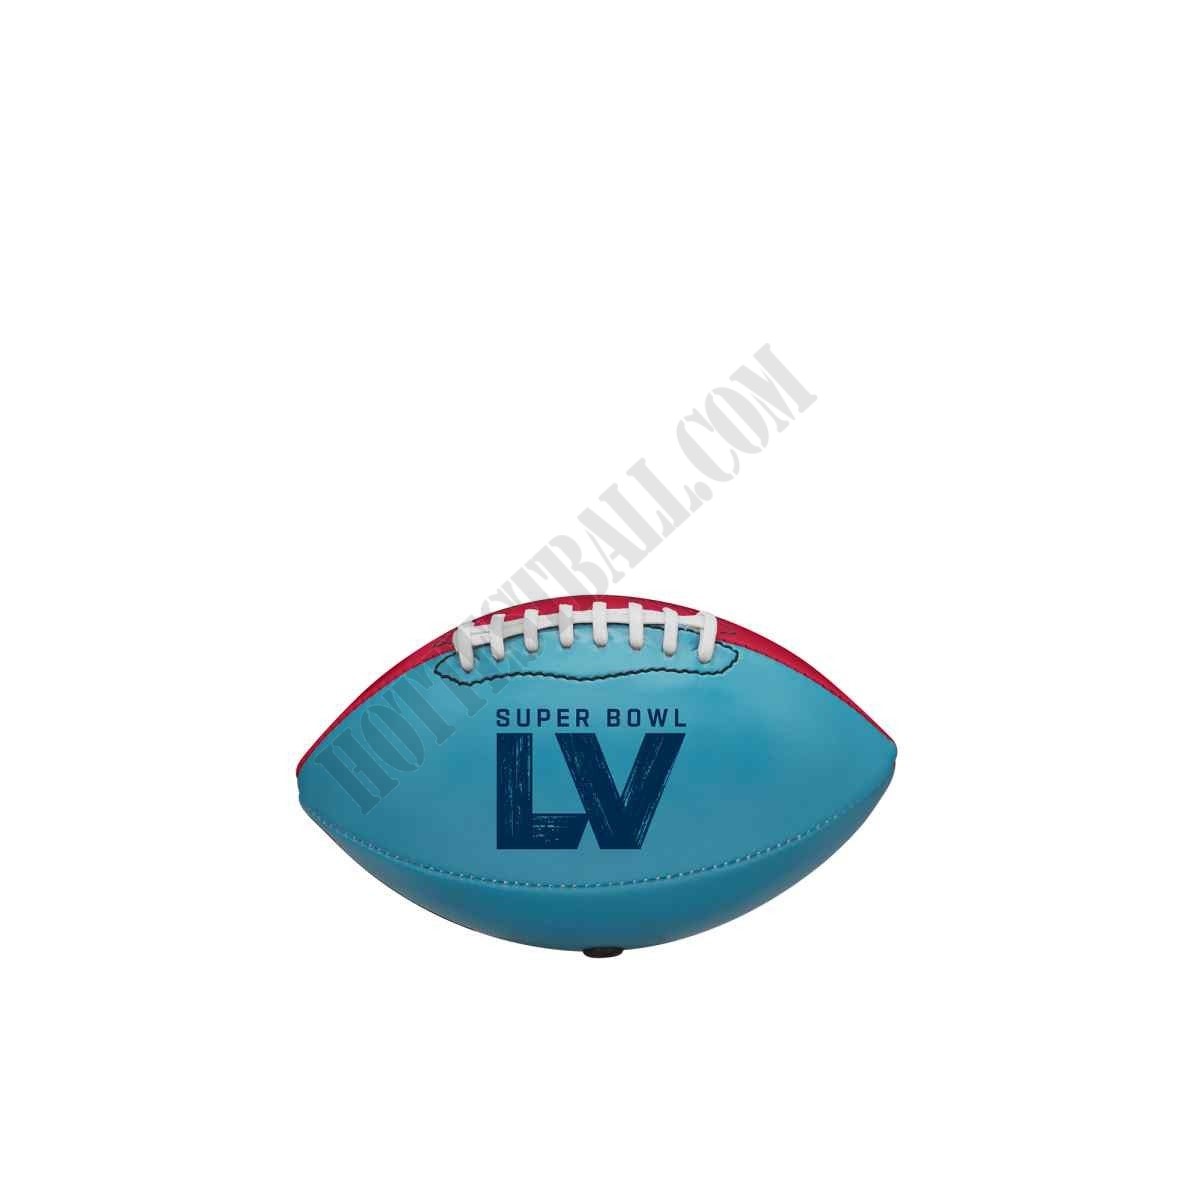 Super Bowl LV Micro Mini Football ● Wilson Promotions - -1